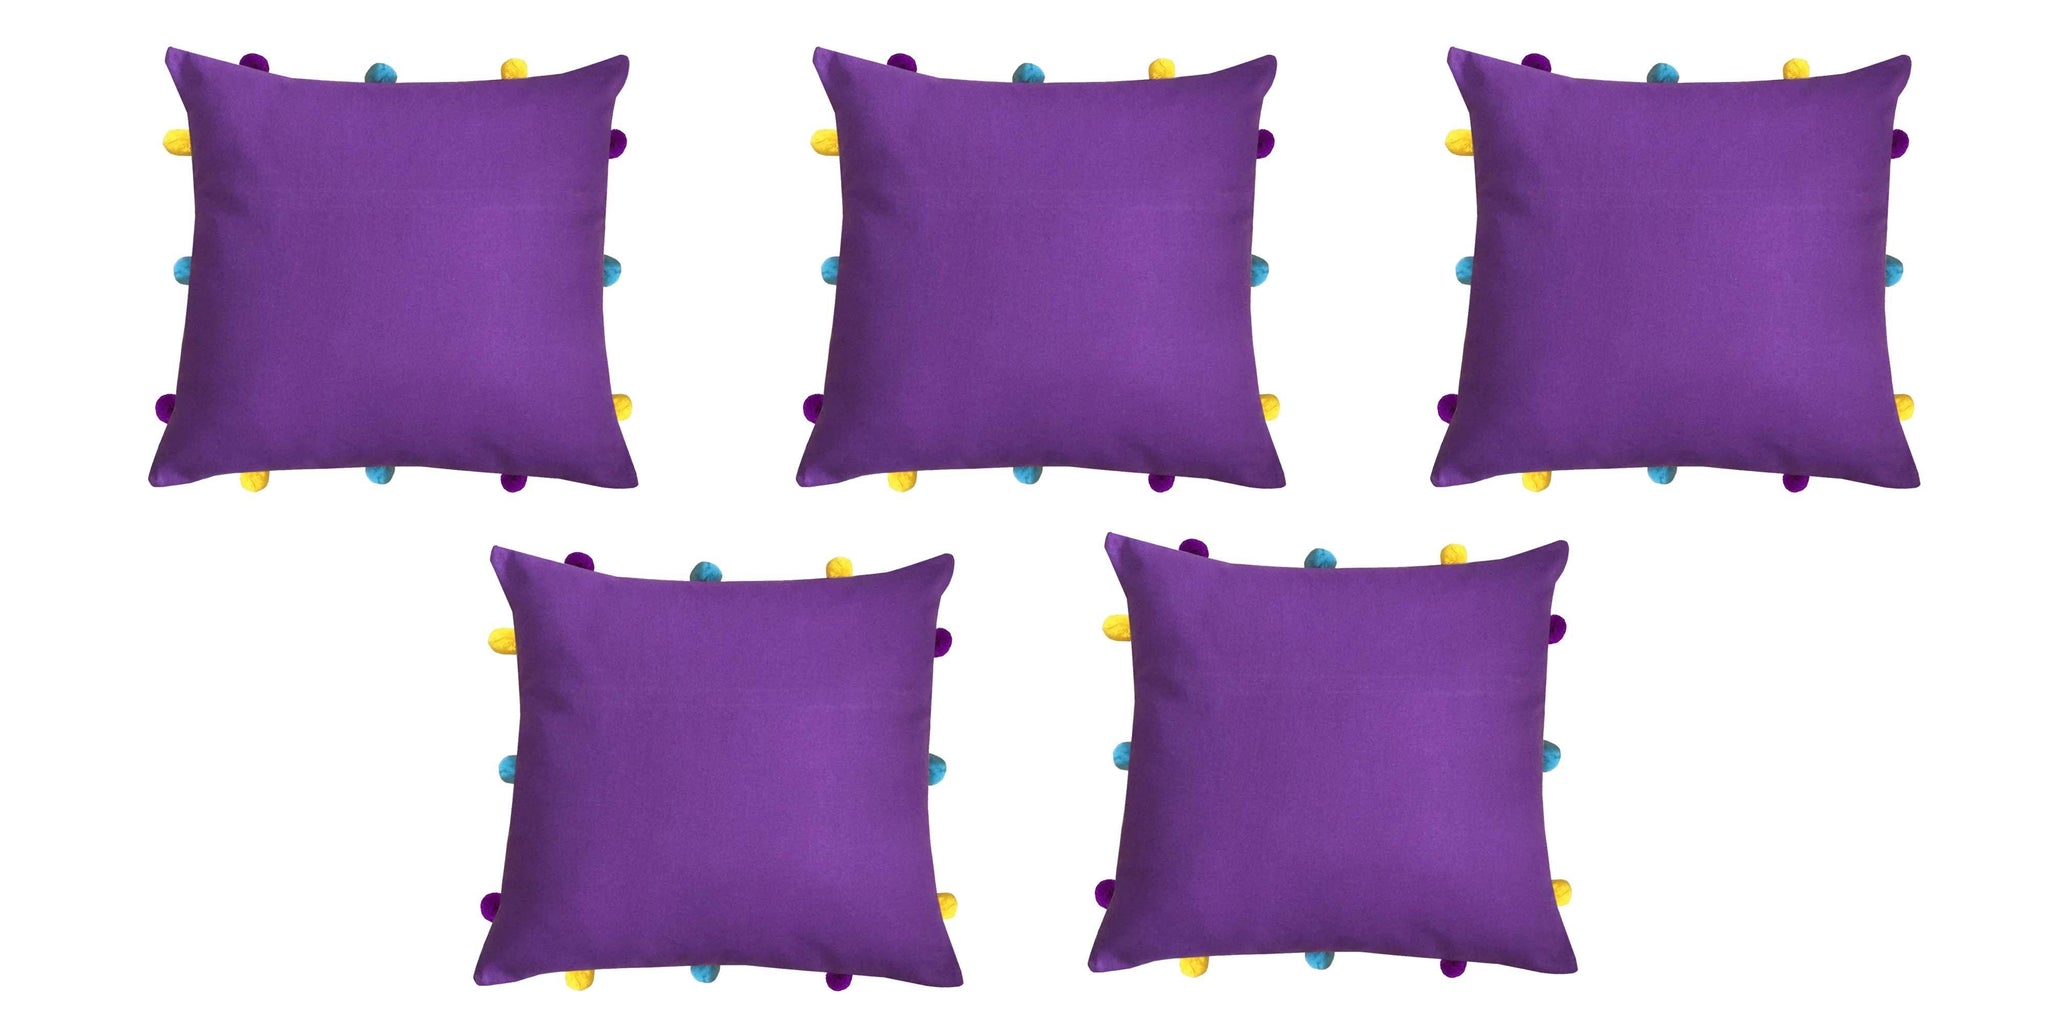 Lushomes Royal Lilac Cushion Cover with Colorful pom poms (5 pcs, 12 x 12”) - Lushomes